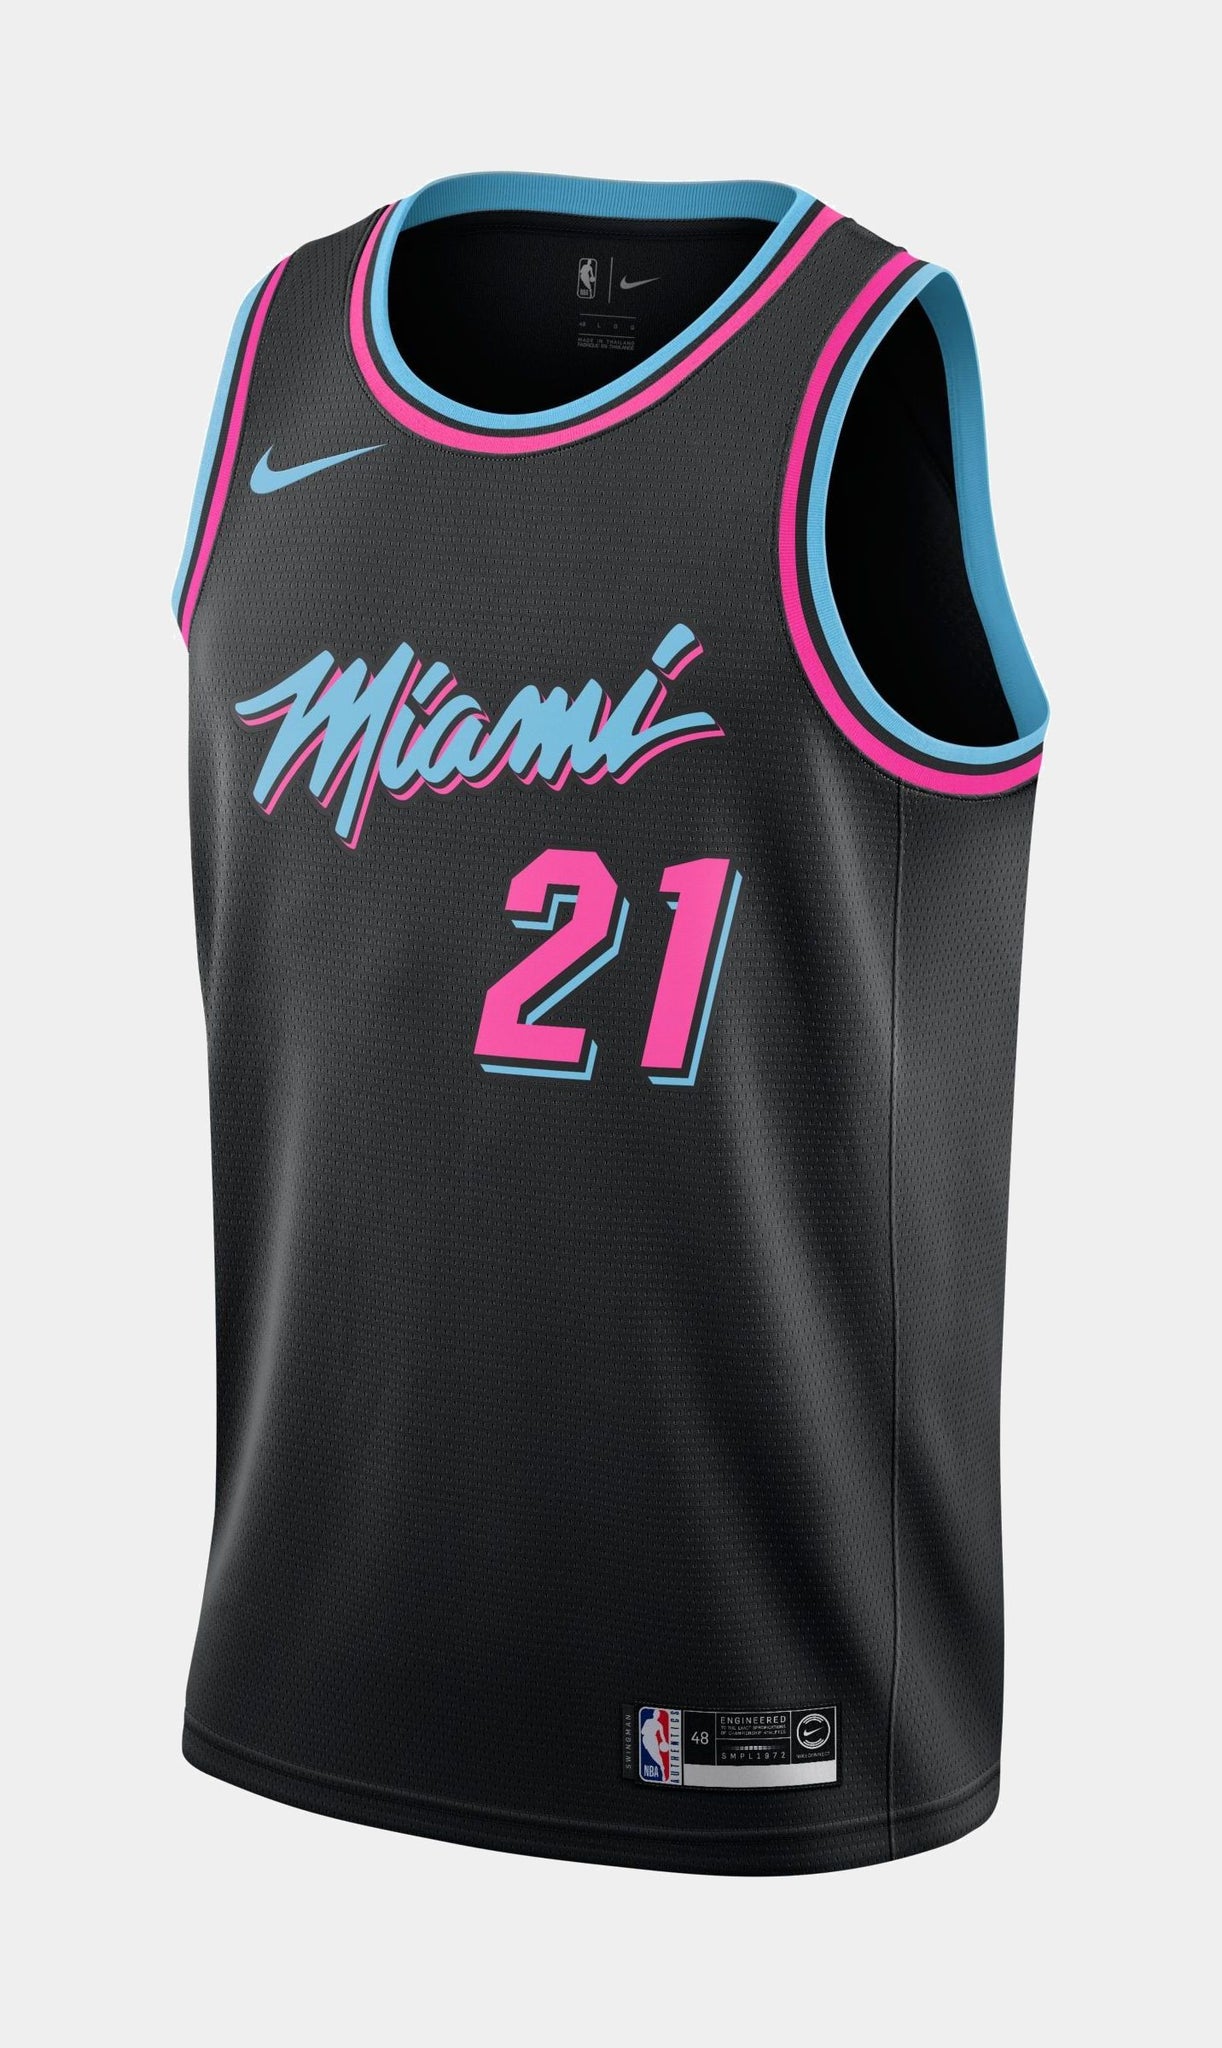 Miami Heat away jersey